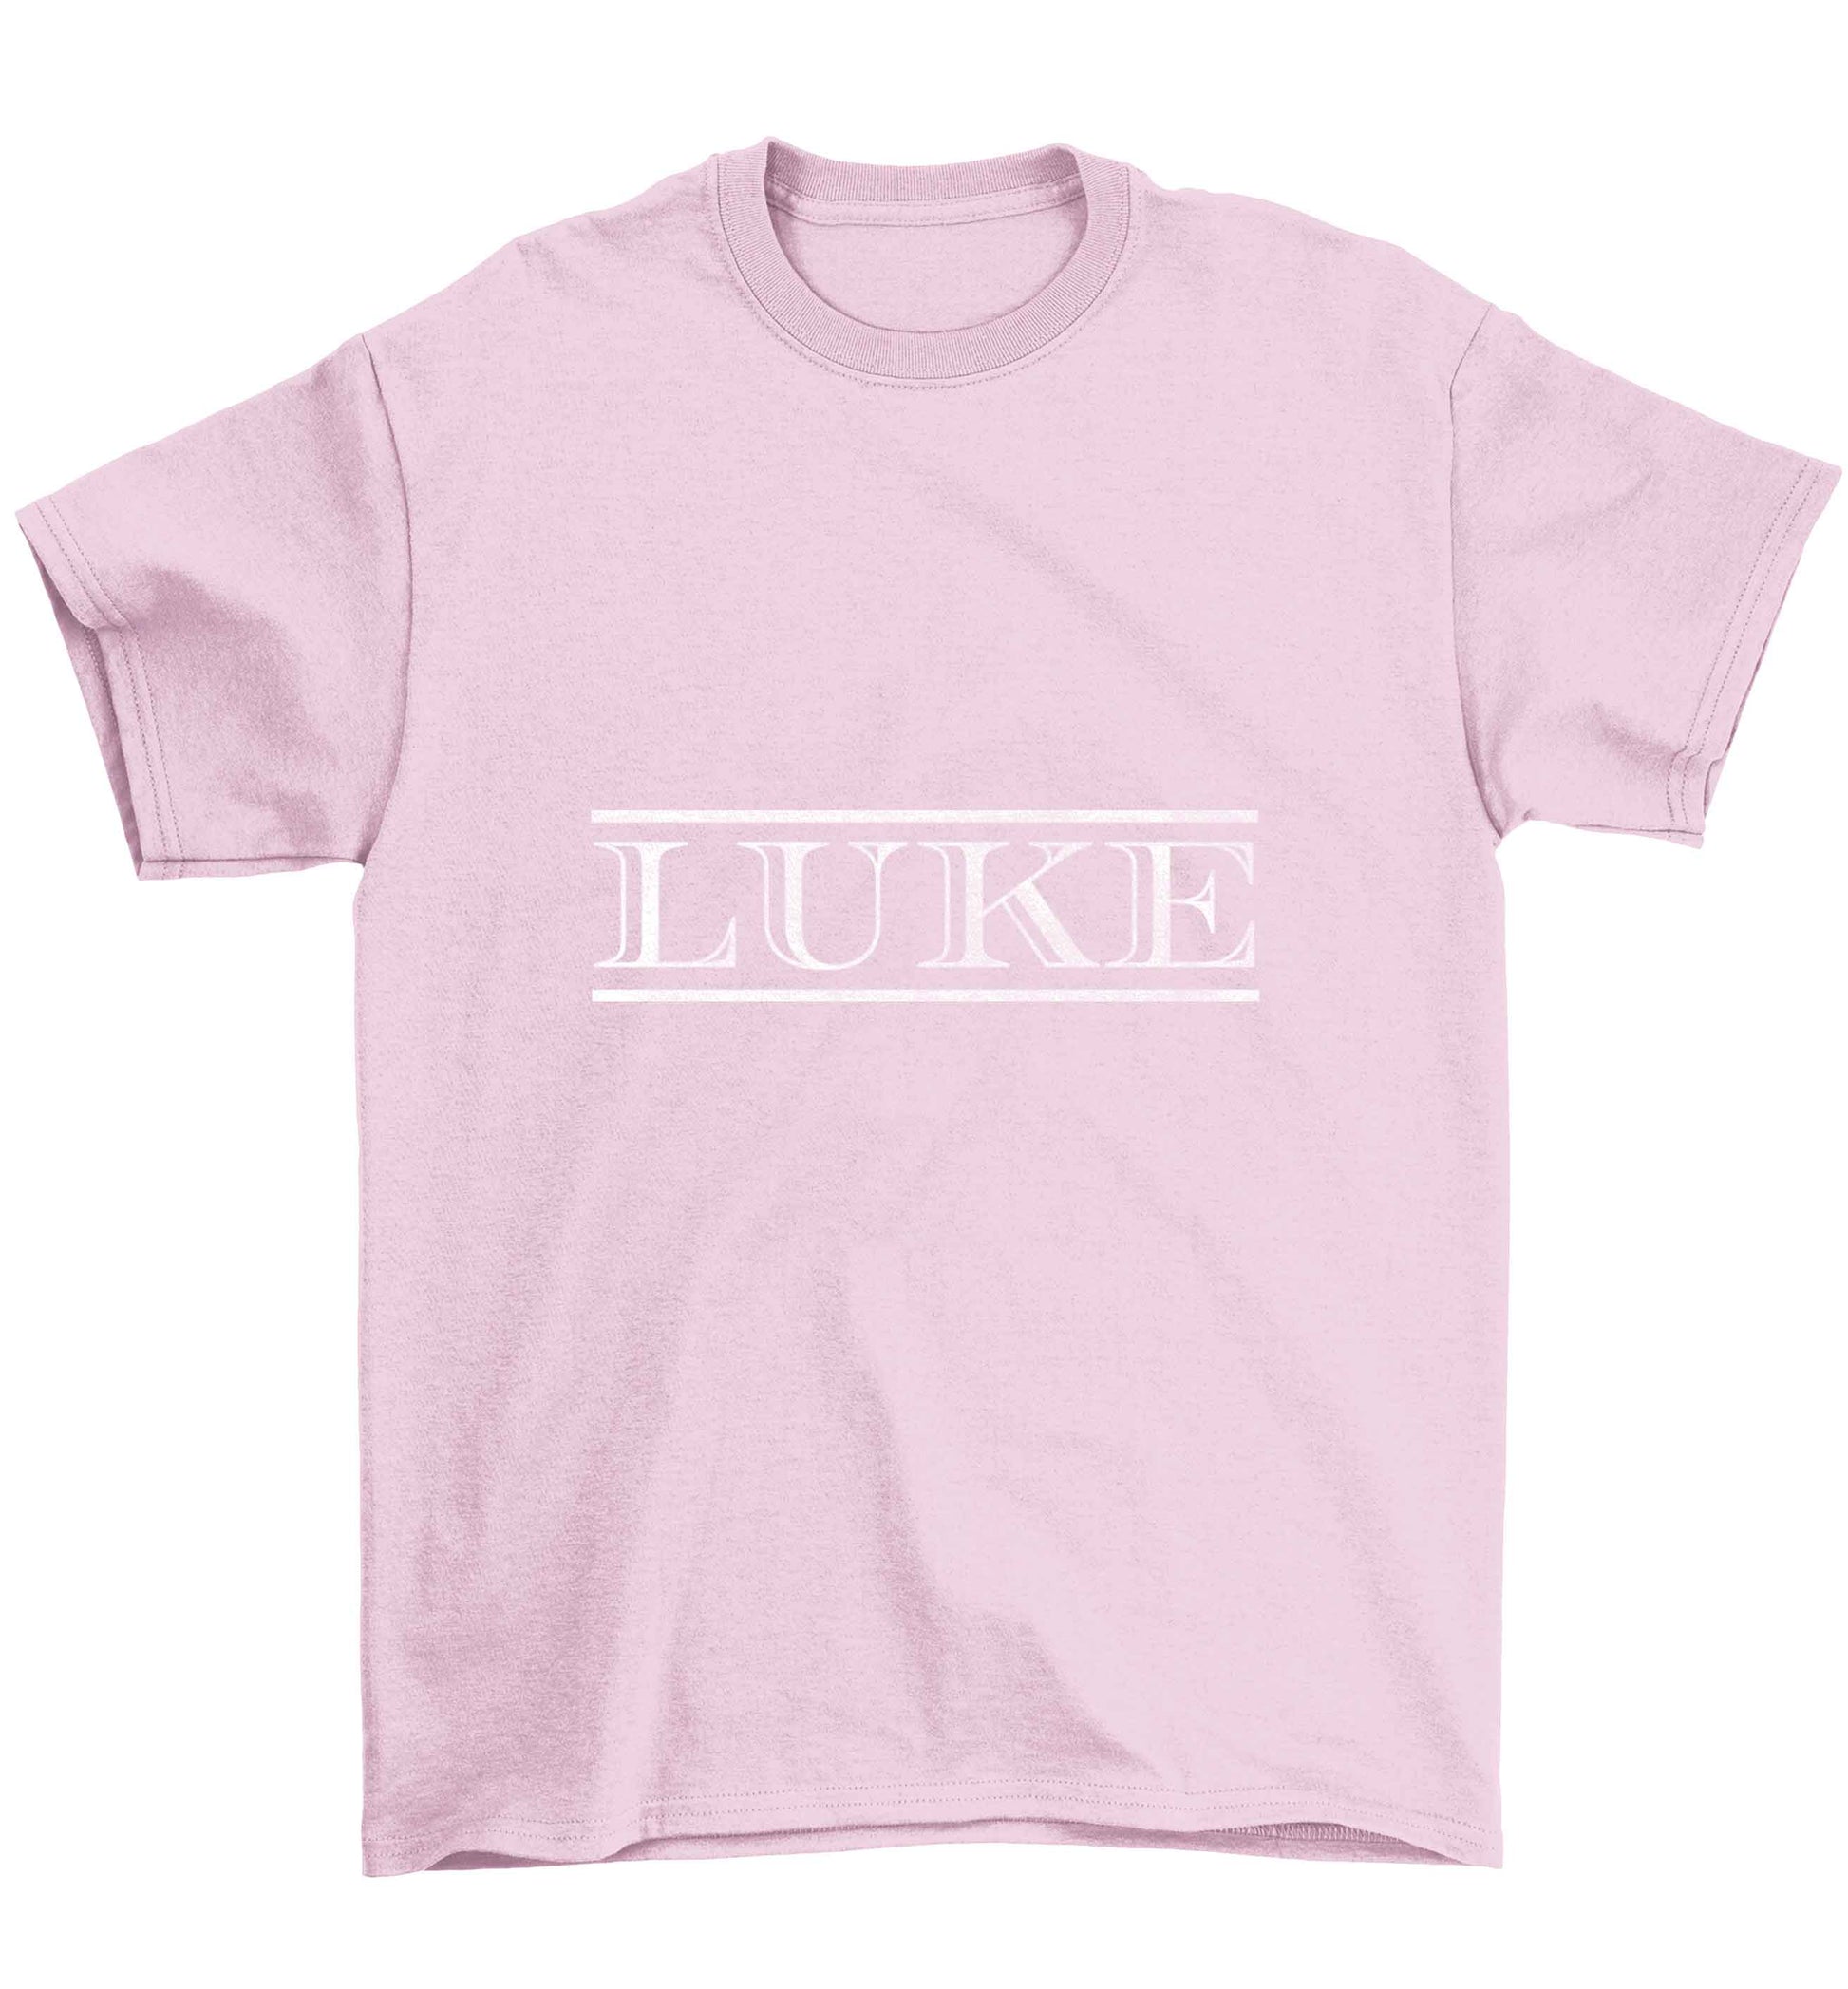 Personalised name Children's light pink Tshirt 12-13 Years